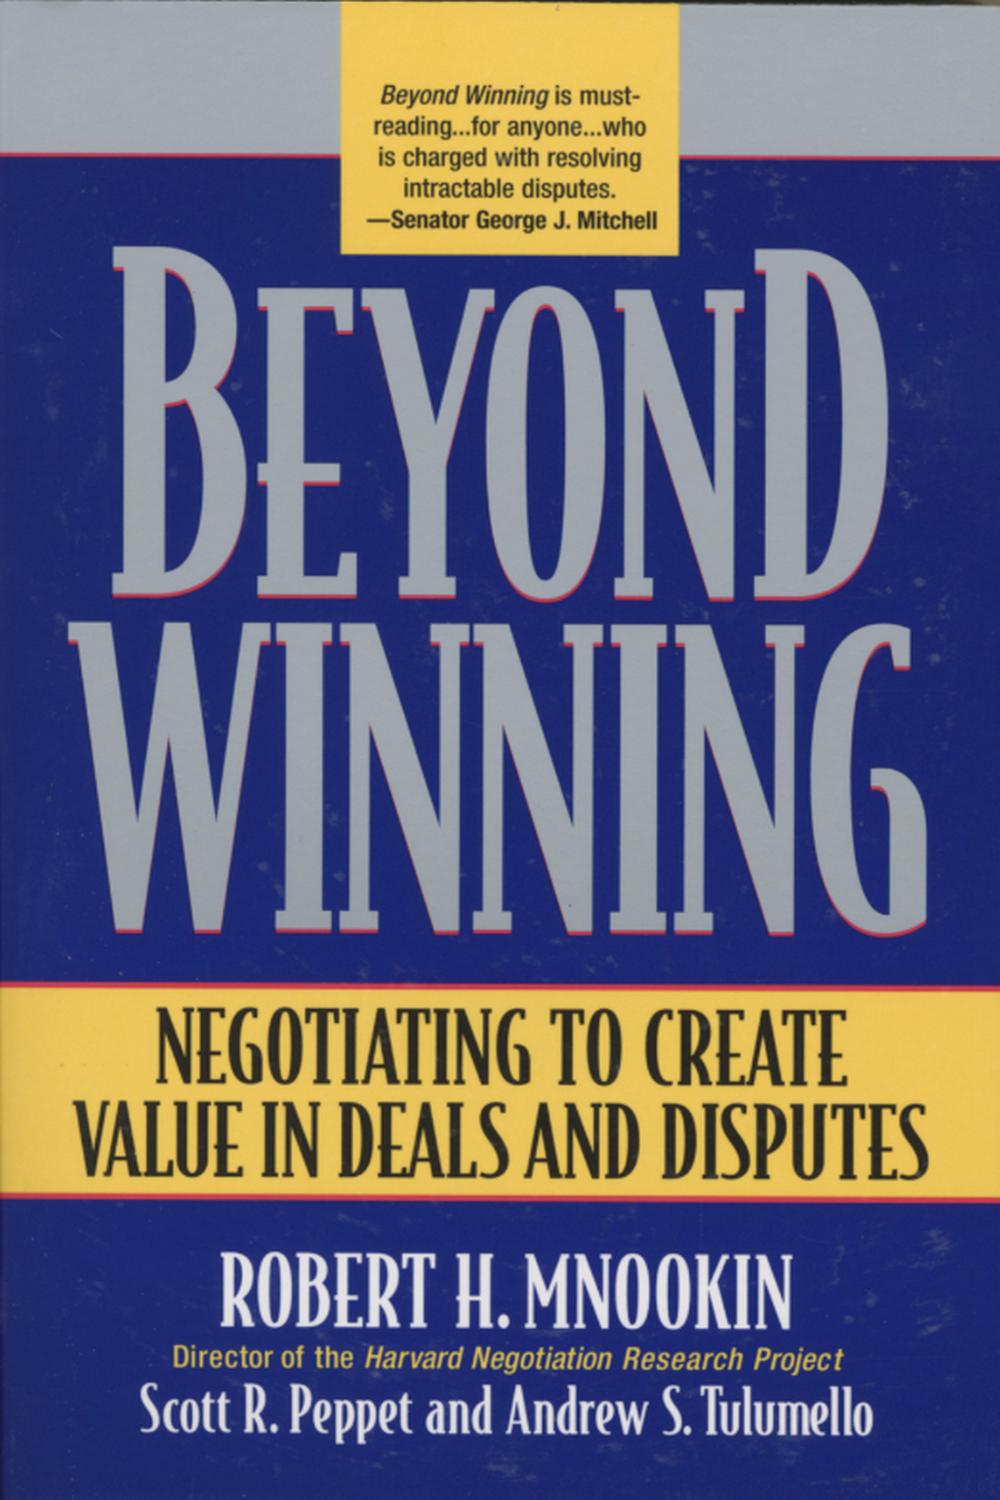 Beyond Winning - Robert H. Mnookin, Scott R. Peppet, Andrew S. Tulumello